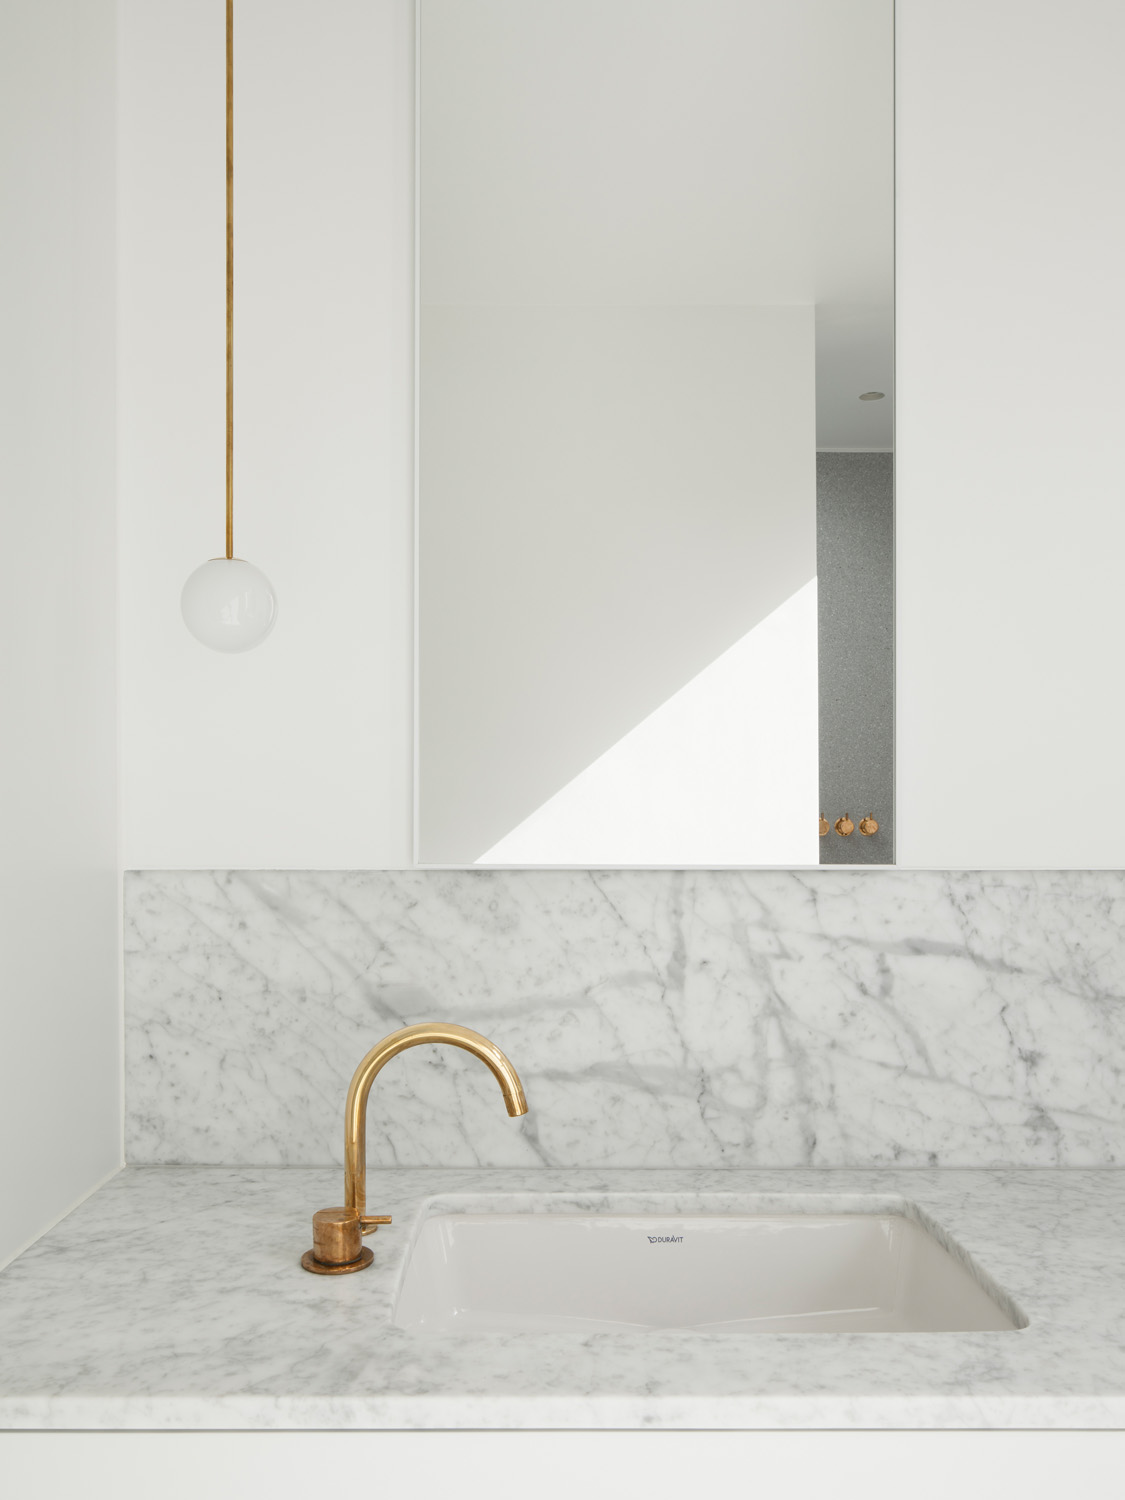 Bathroom sink by OSullivan Skoufoglou Architects